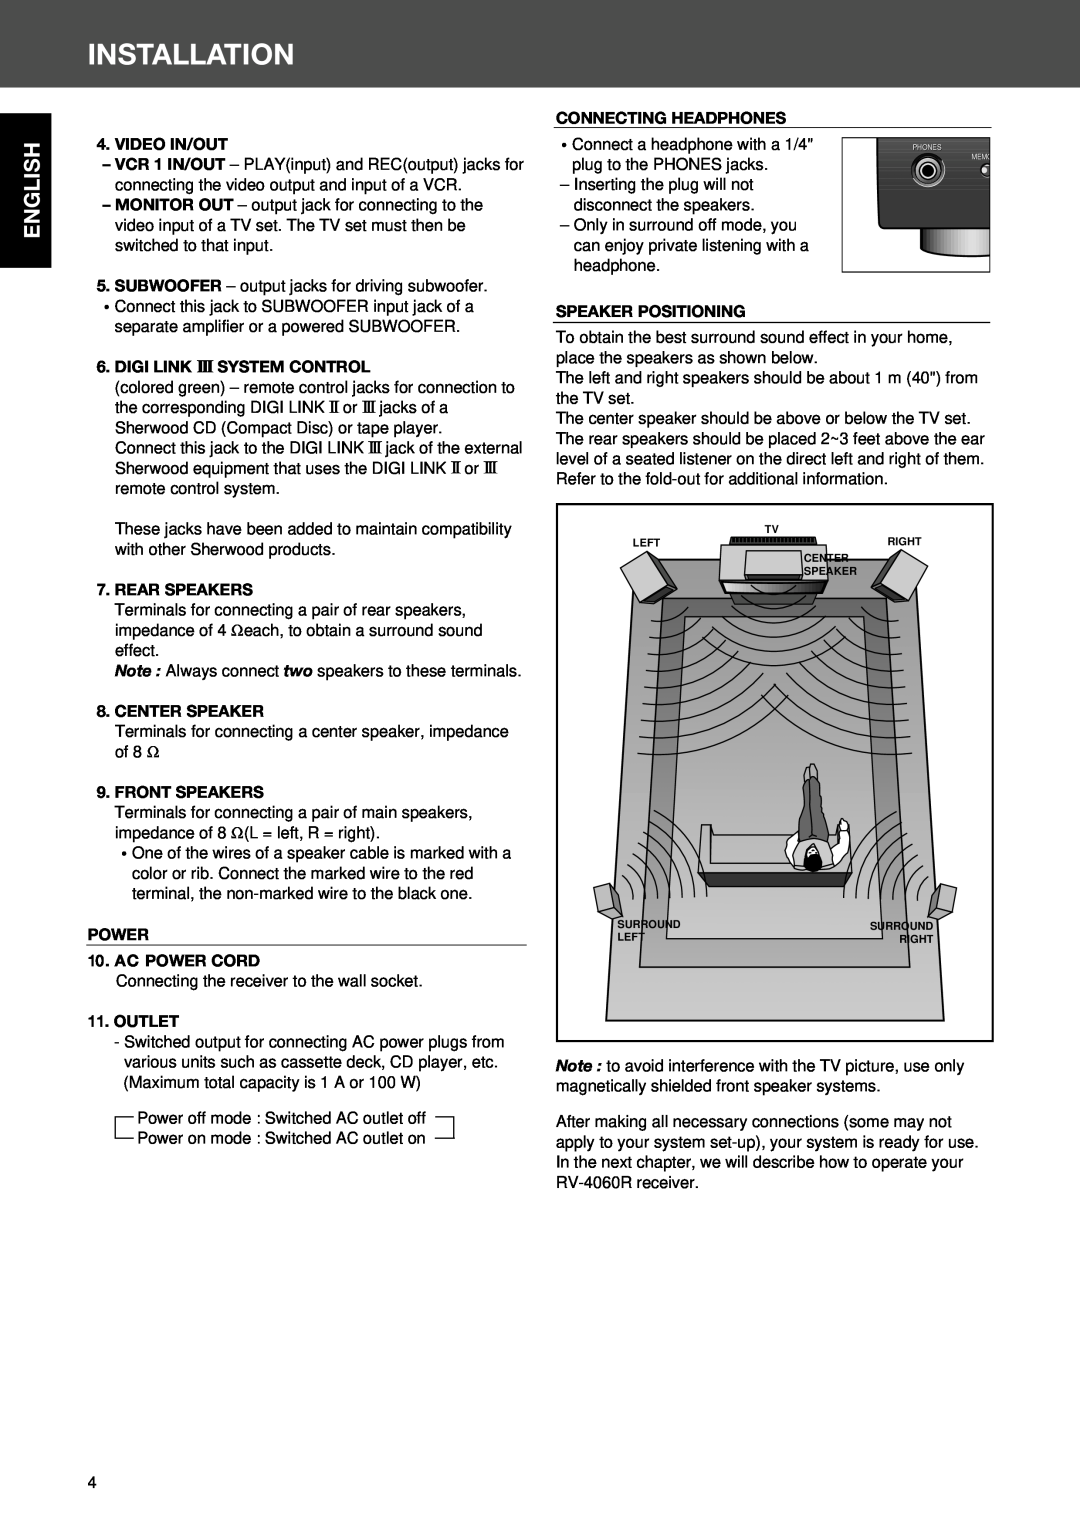 Sherwood RV-4060R manual Installation, Speaker Positioning, English 